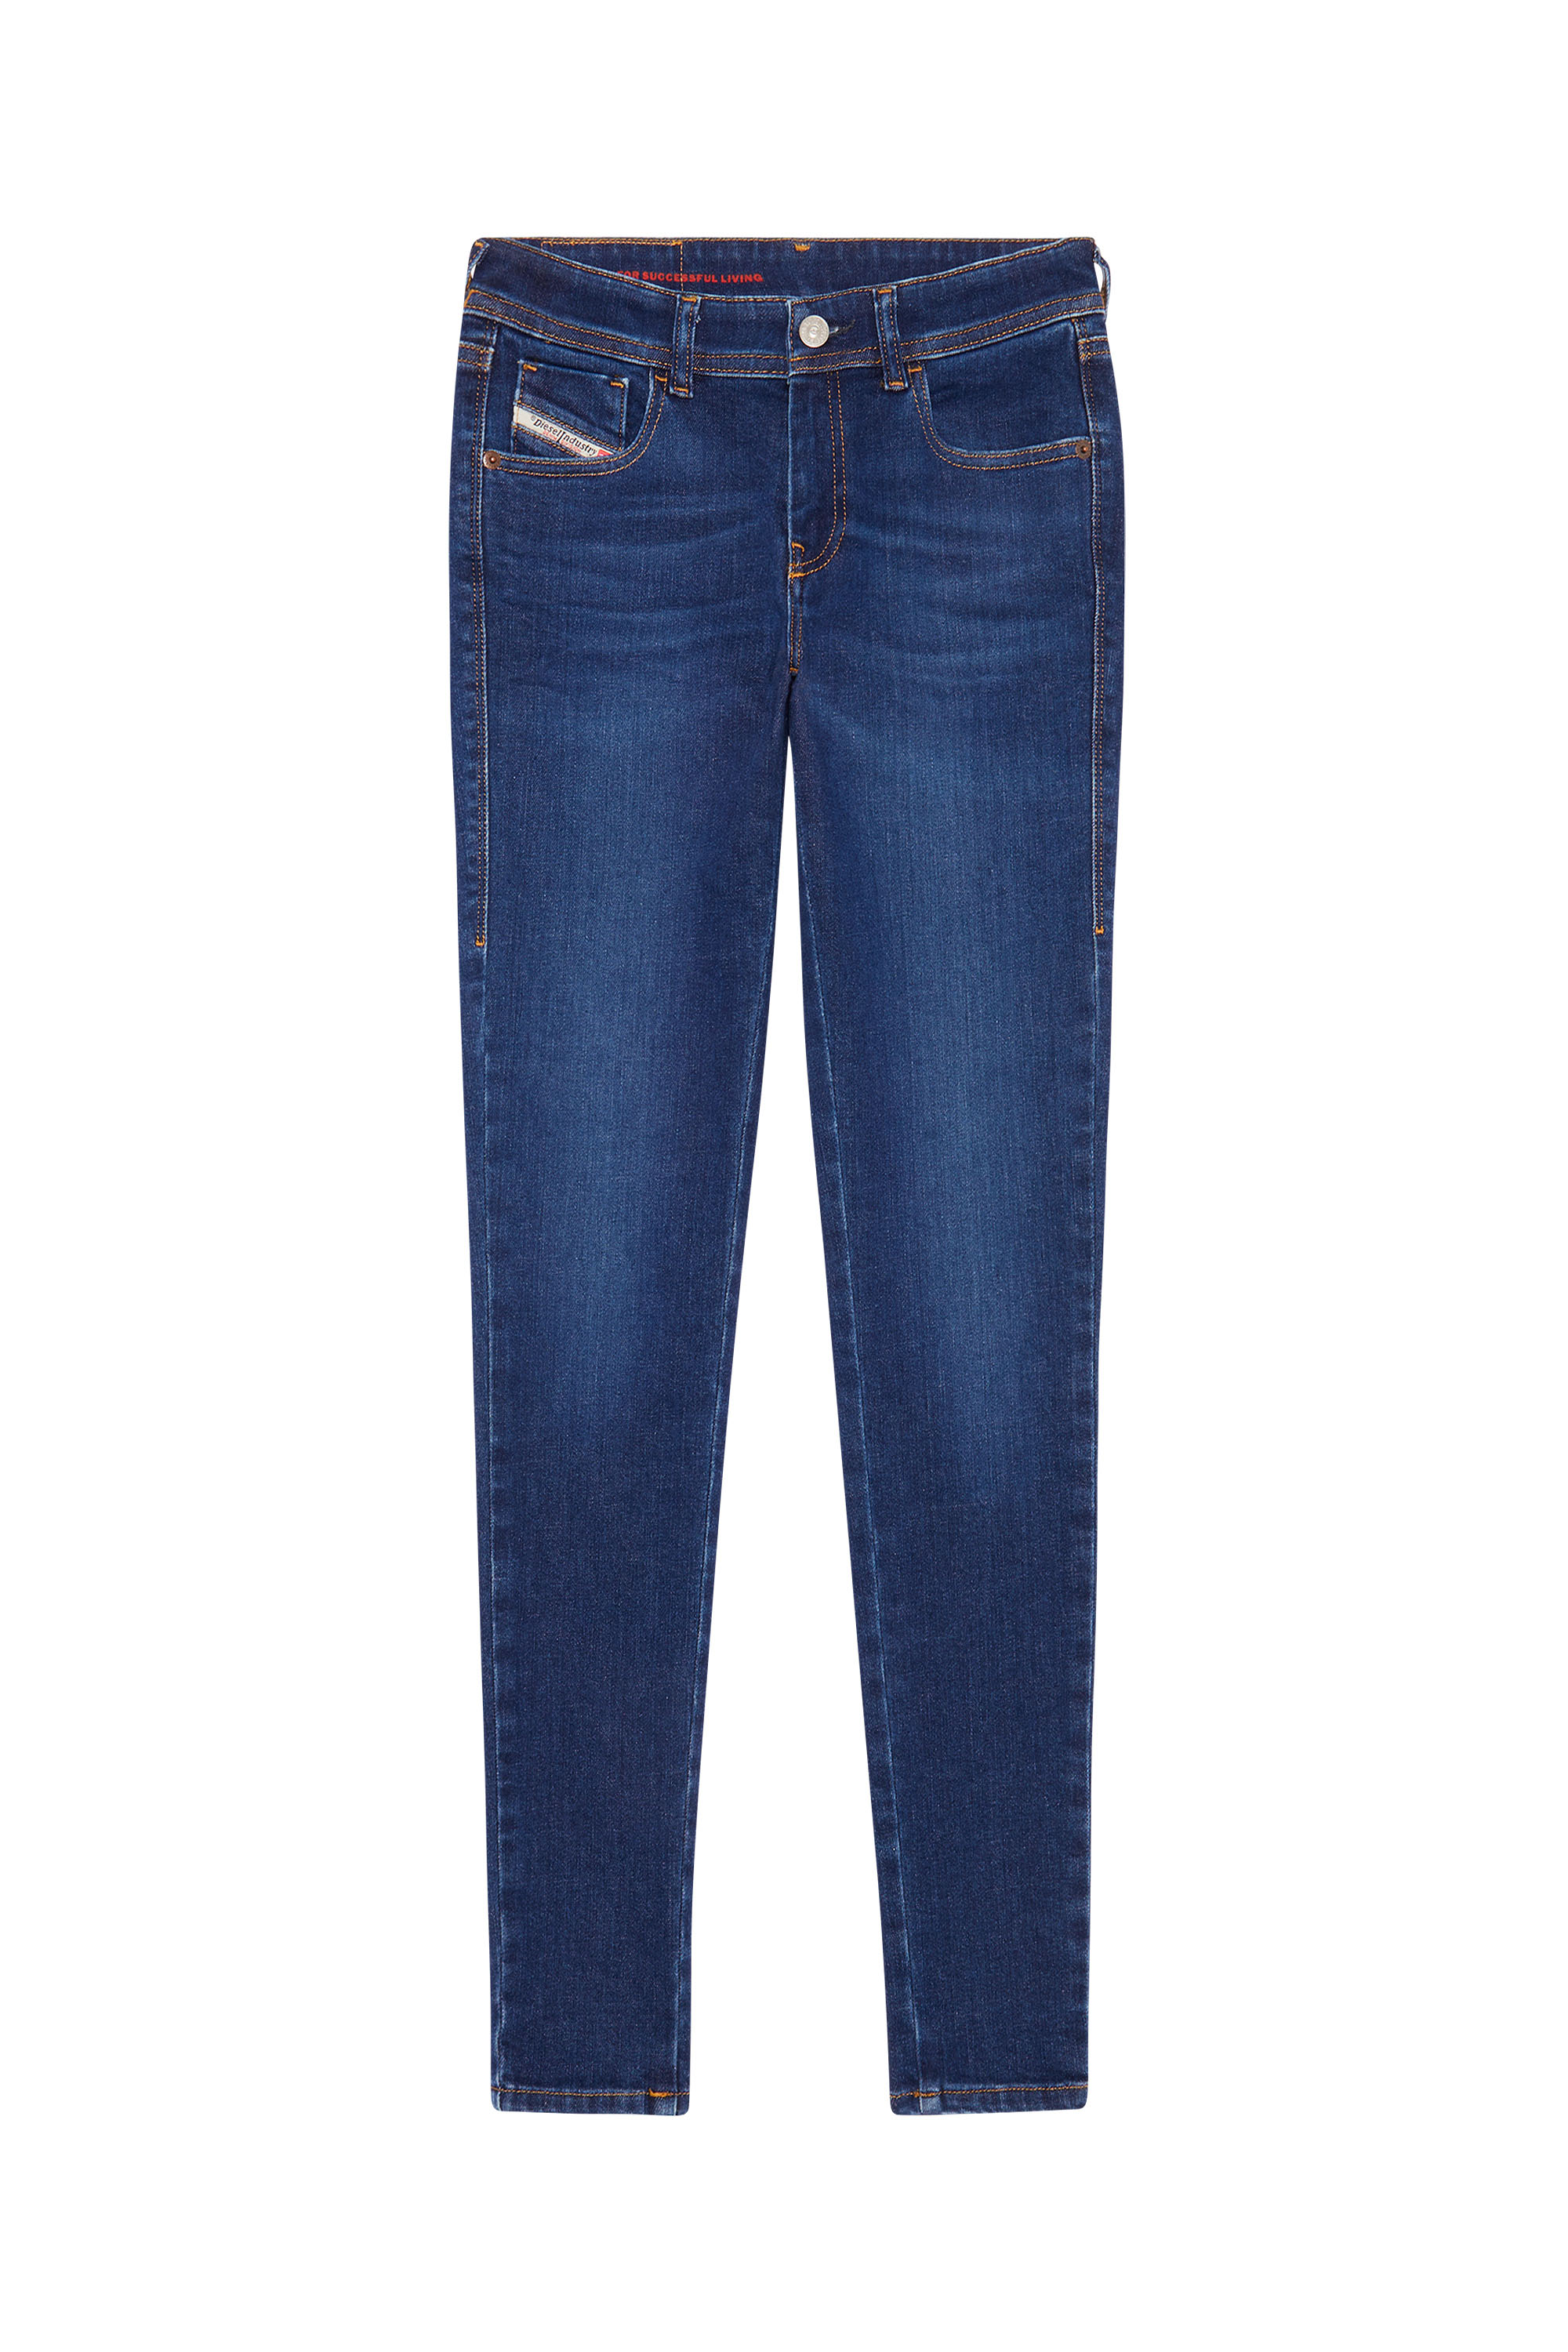 2018 SLANDY-LOW 09C19 Super skinny Jeans, Azul Oscuro - Vaqueros